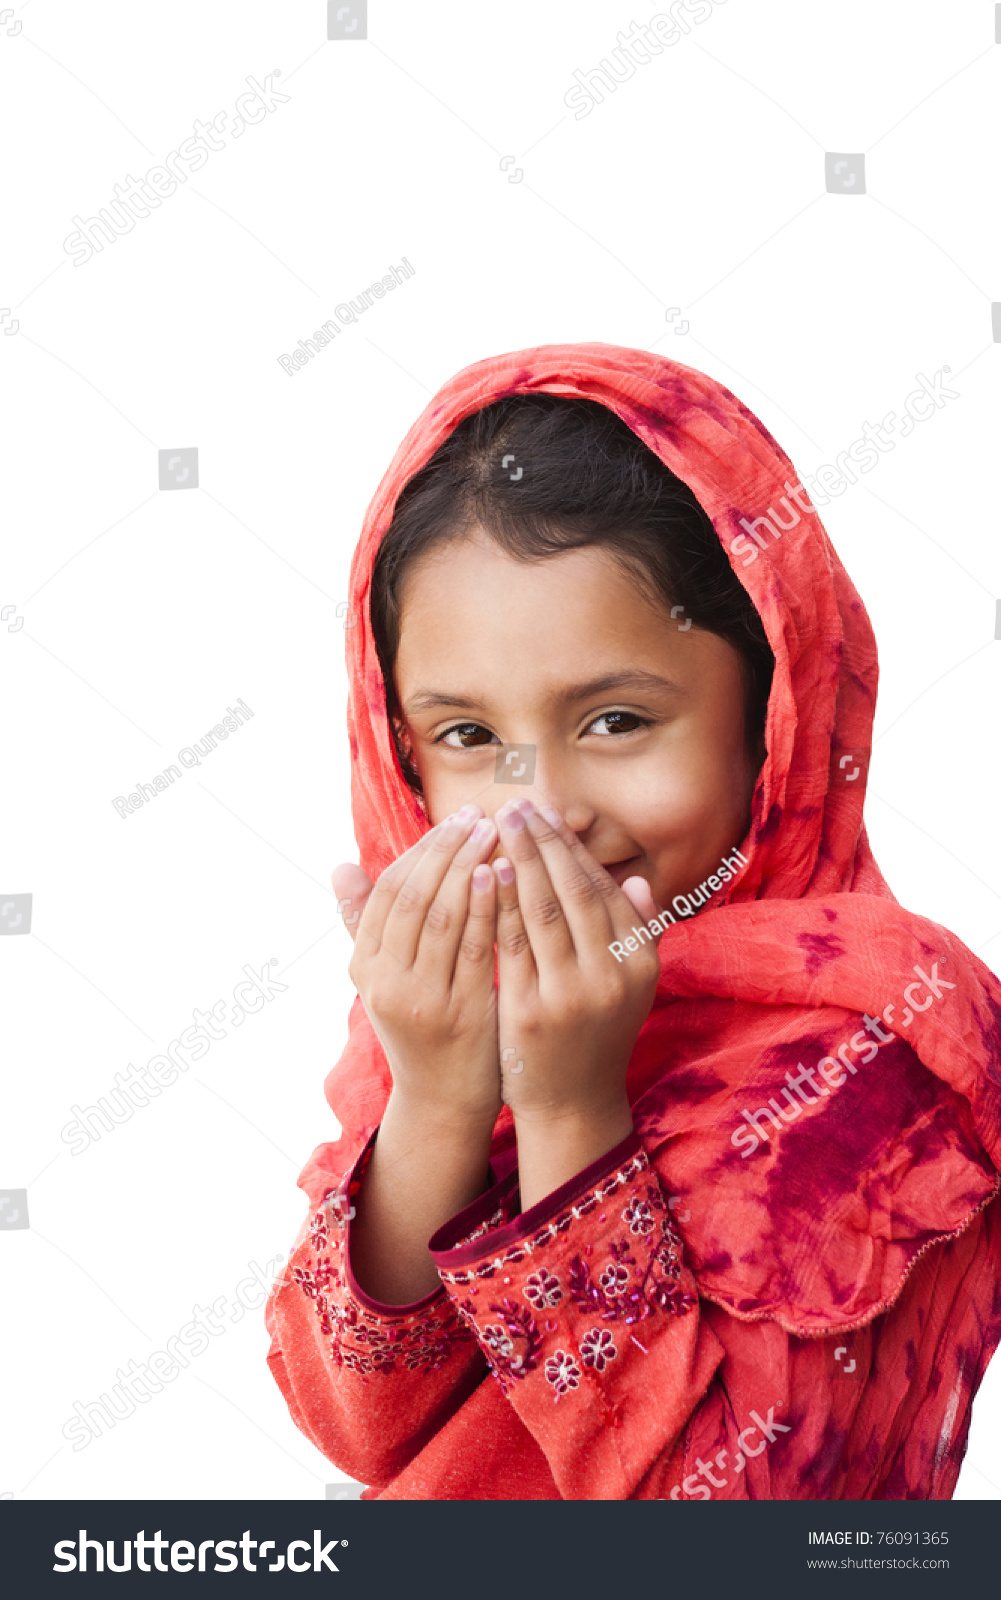 dating a muslim girl